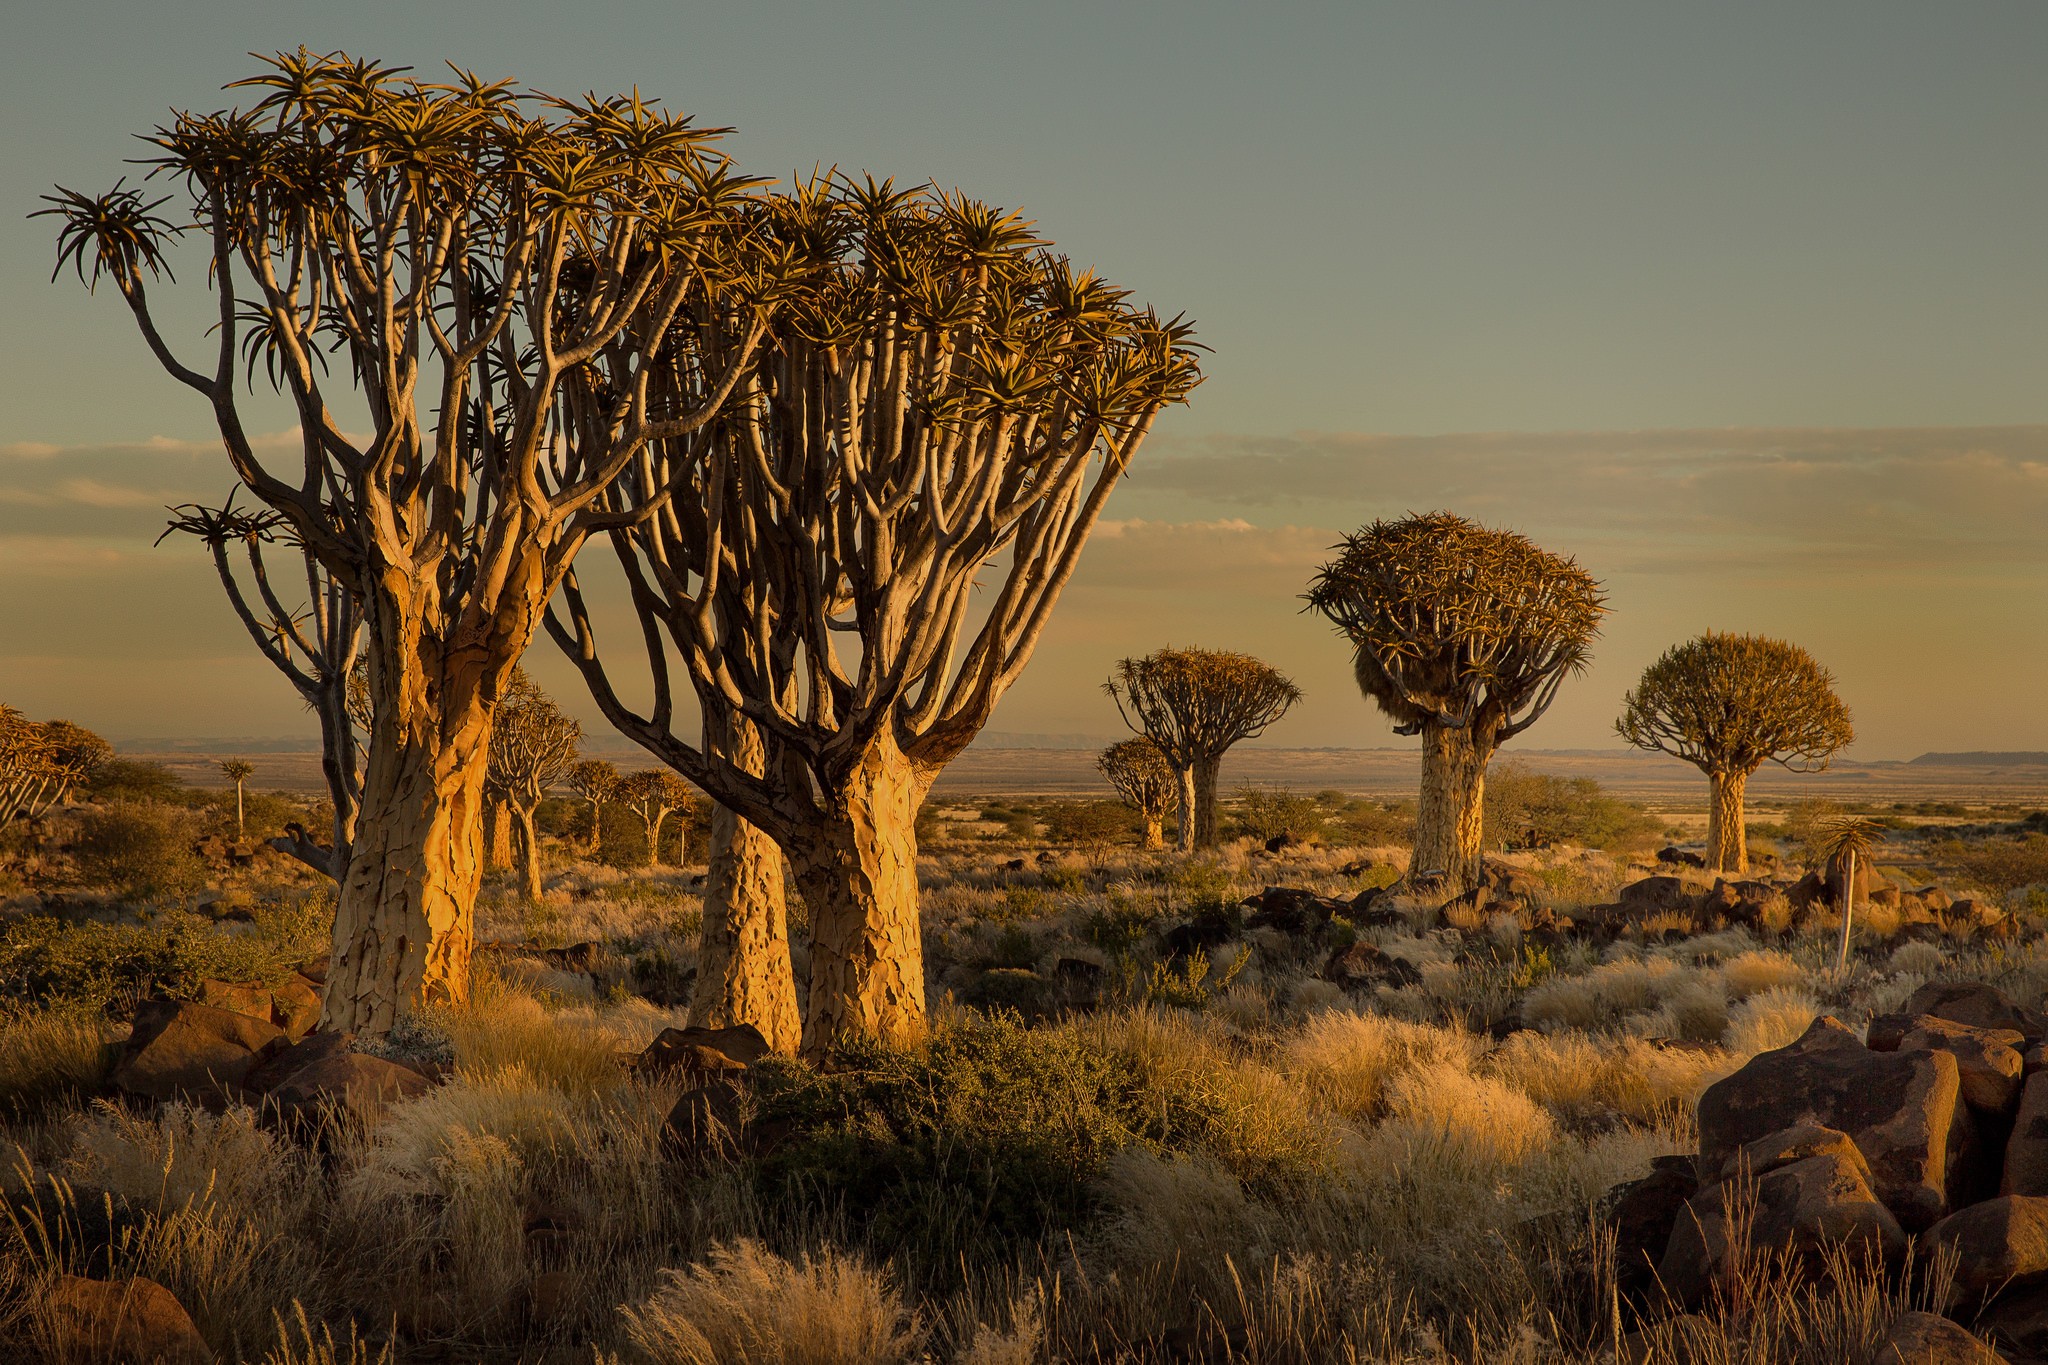 General 2048x1365 Namibia Africa nature landscape trees savannah shrubs sunset plants